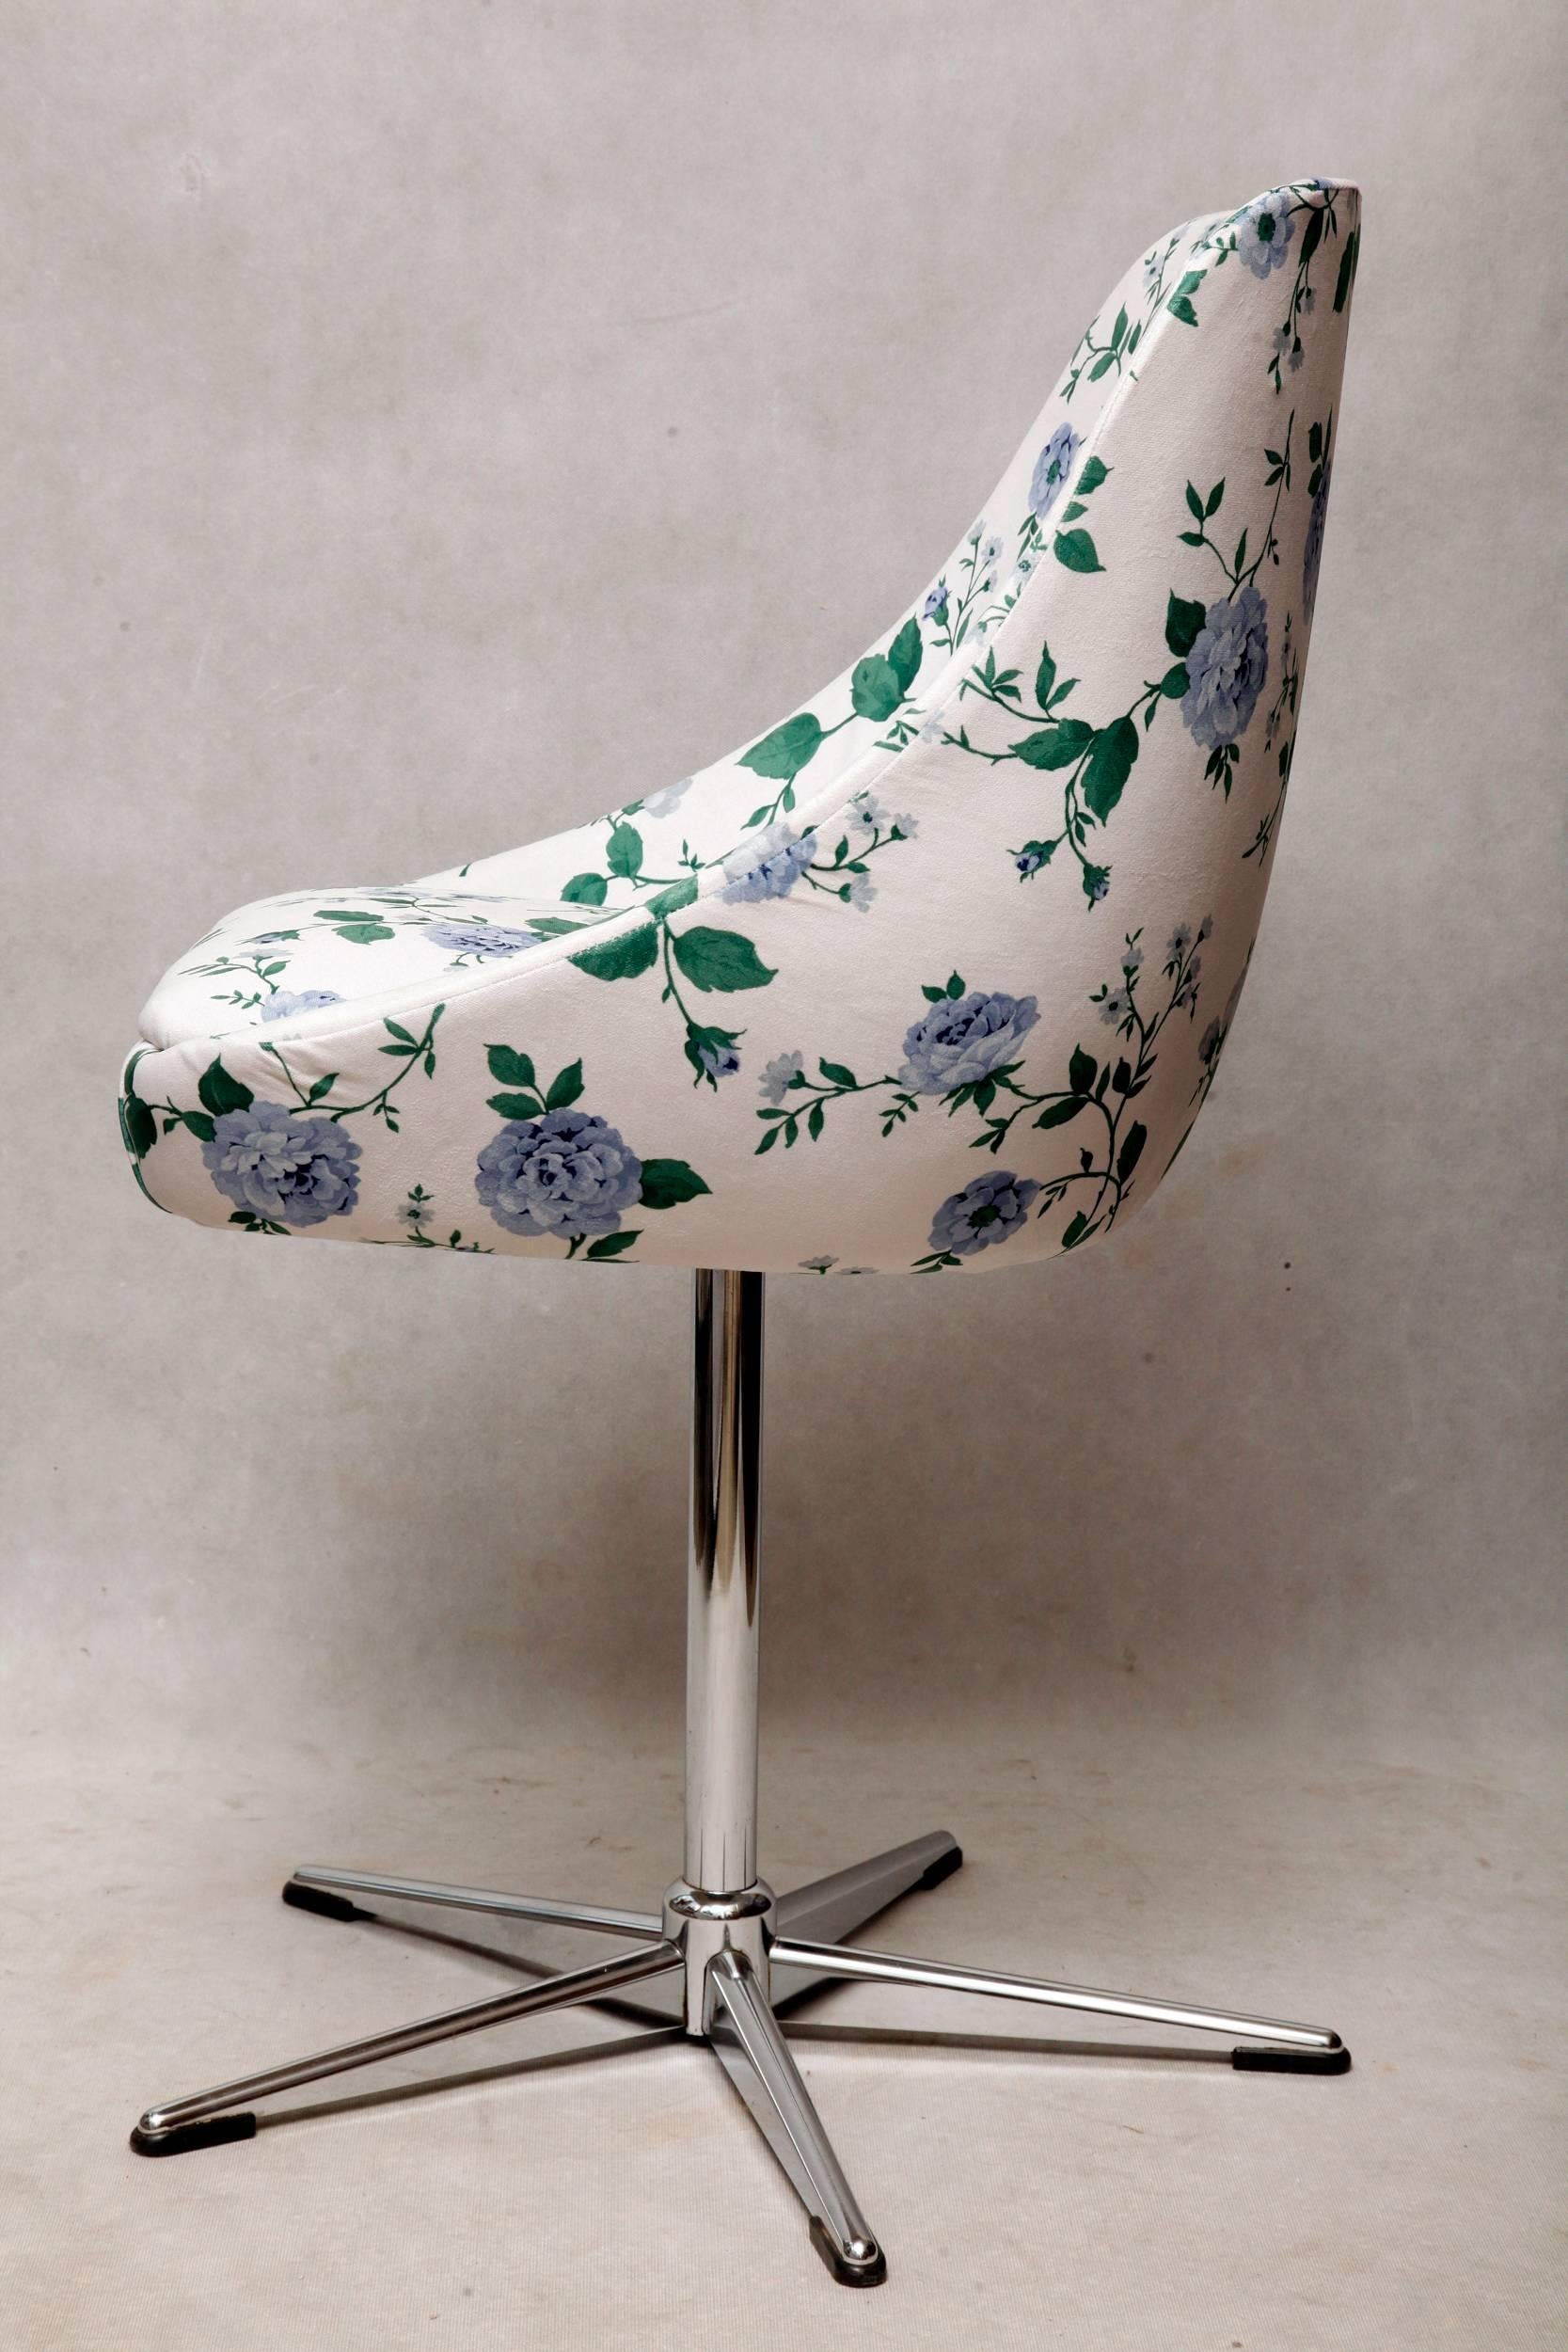 Plush Swivel Chair, Chrome, White and Floar, Poland, 1970s For Sale 1